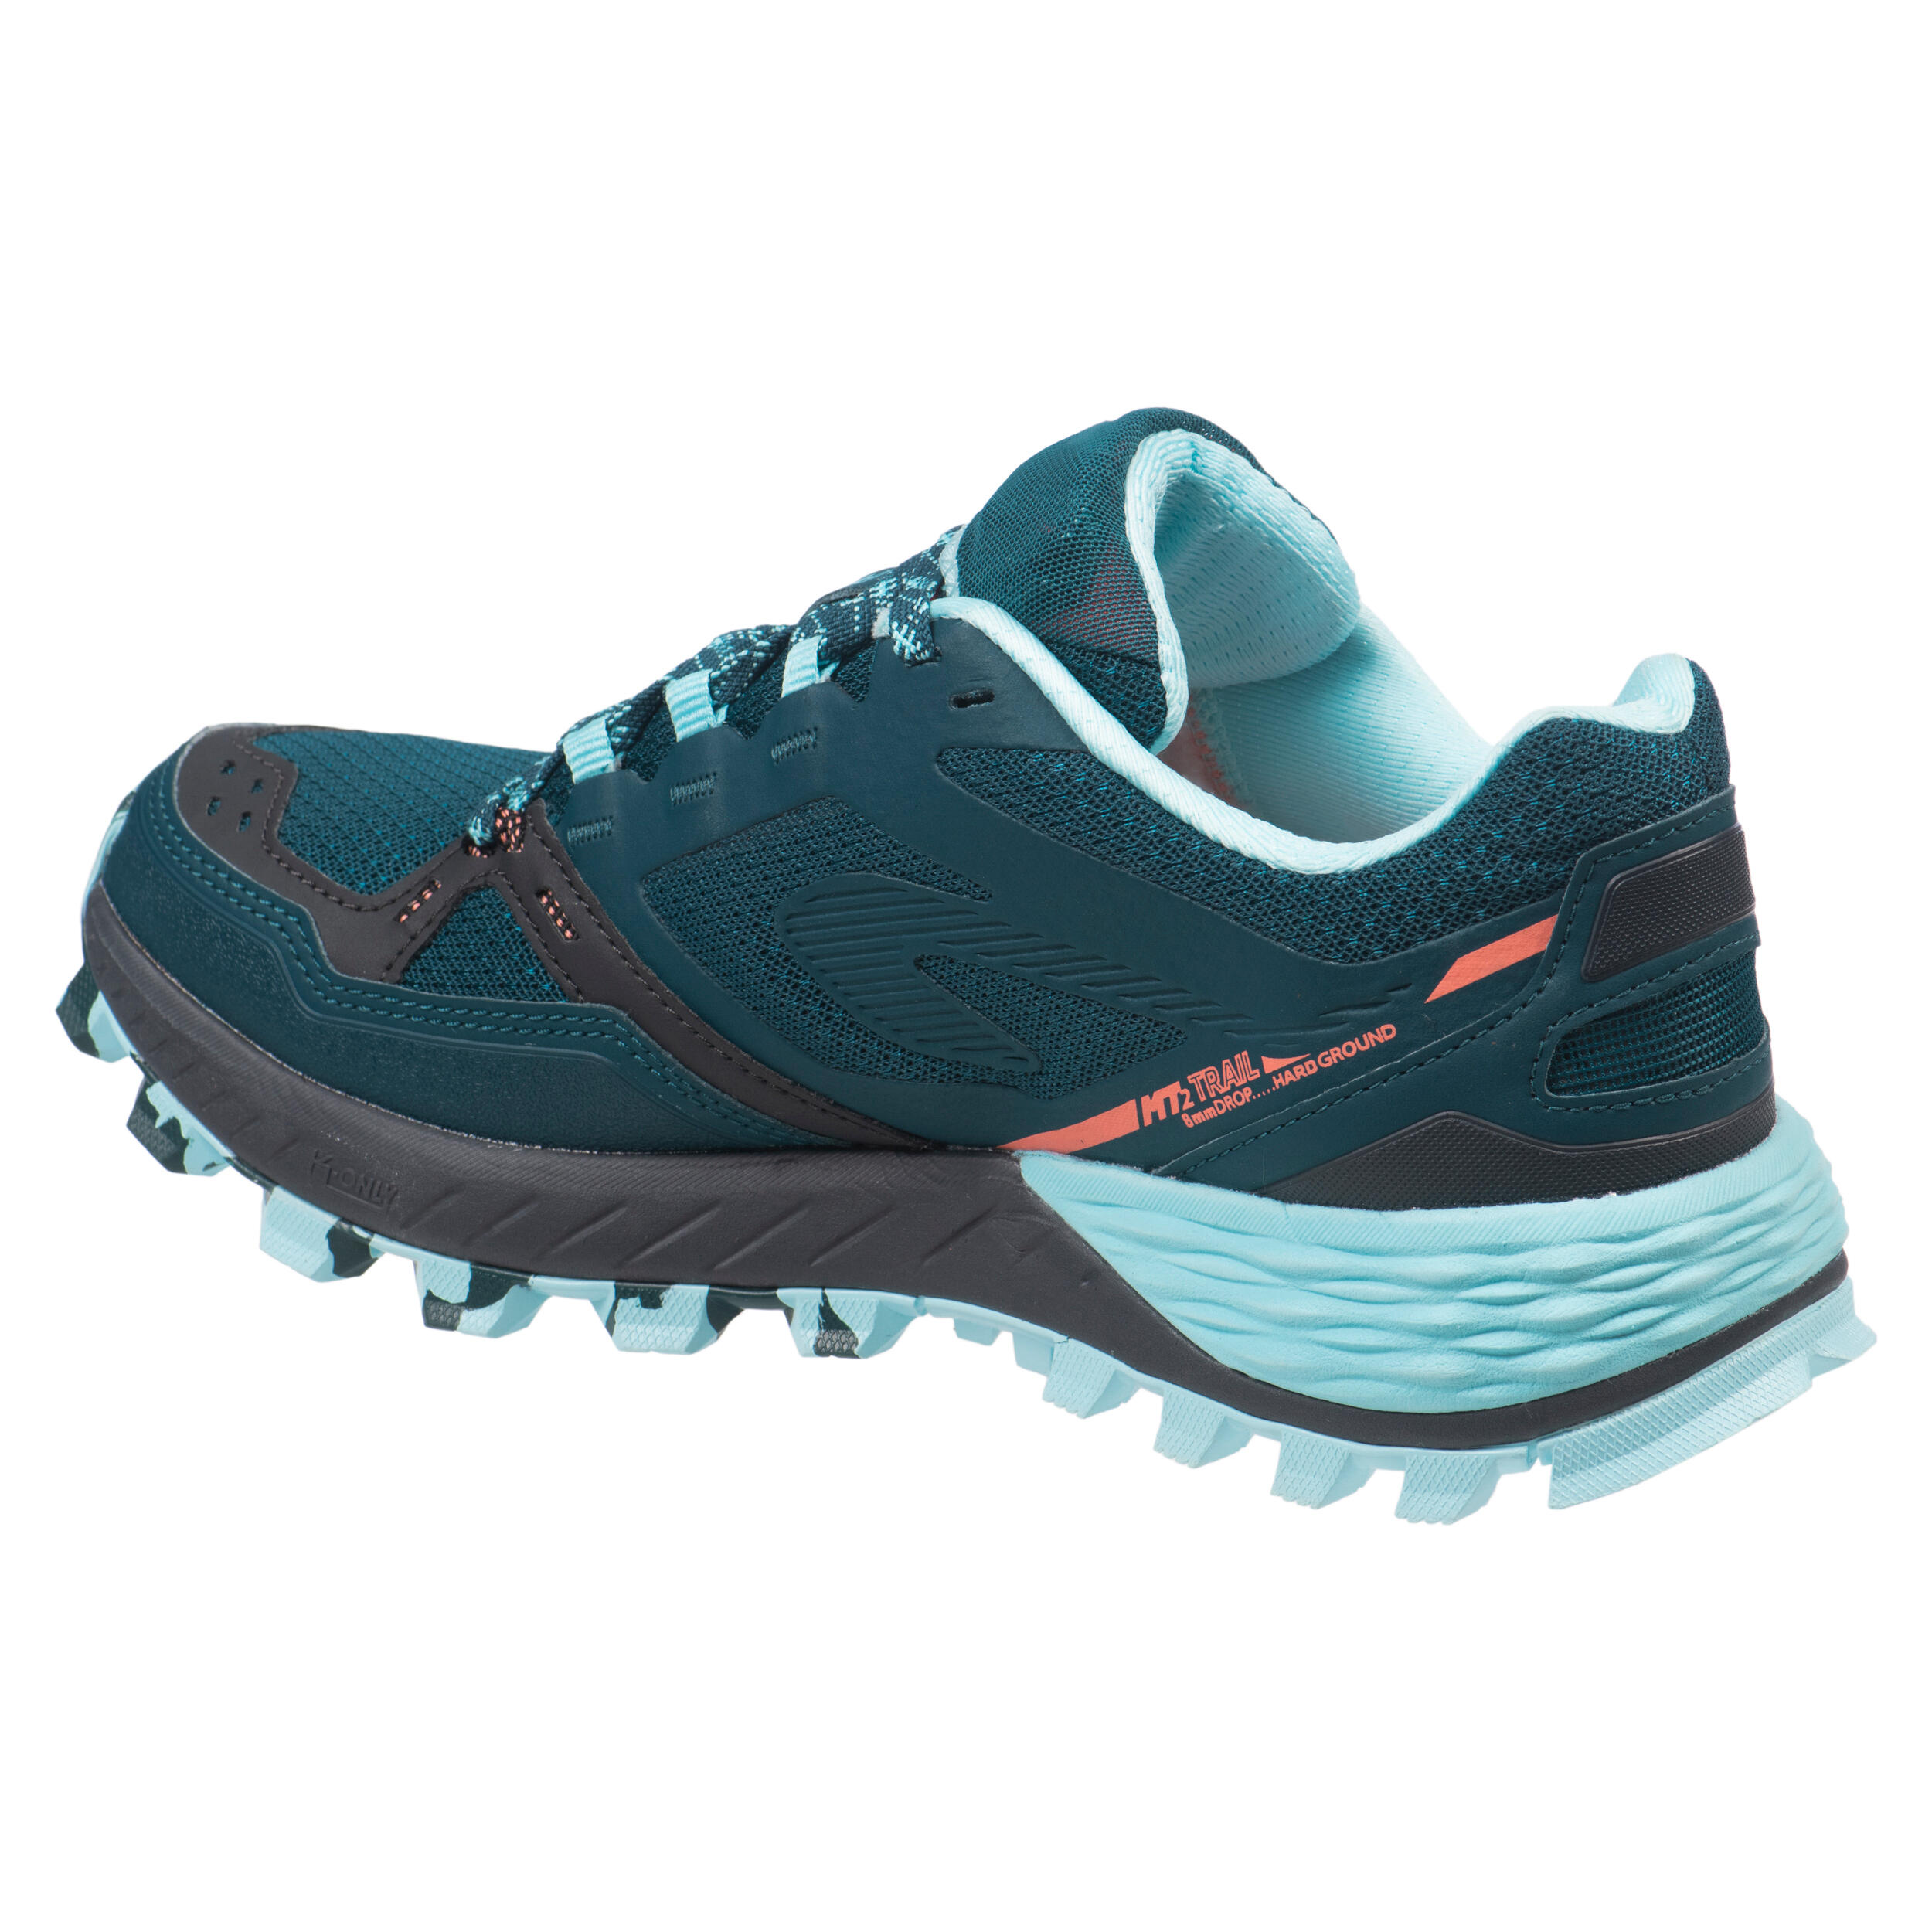 MT 2 Women's Trail Running Shoes - Dark Blue/Light Blue 6/8